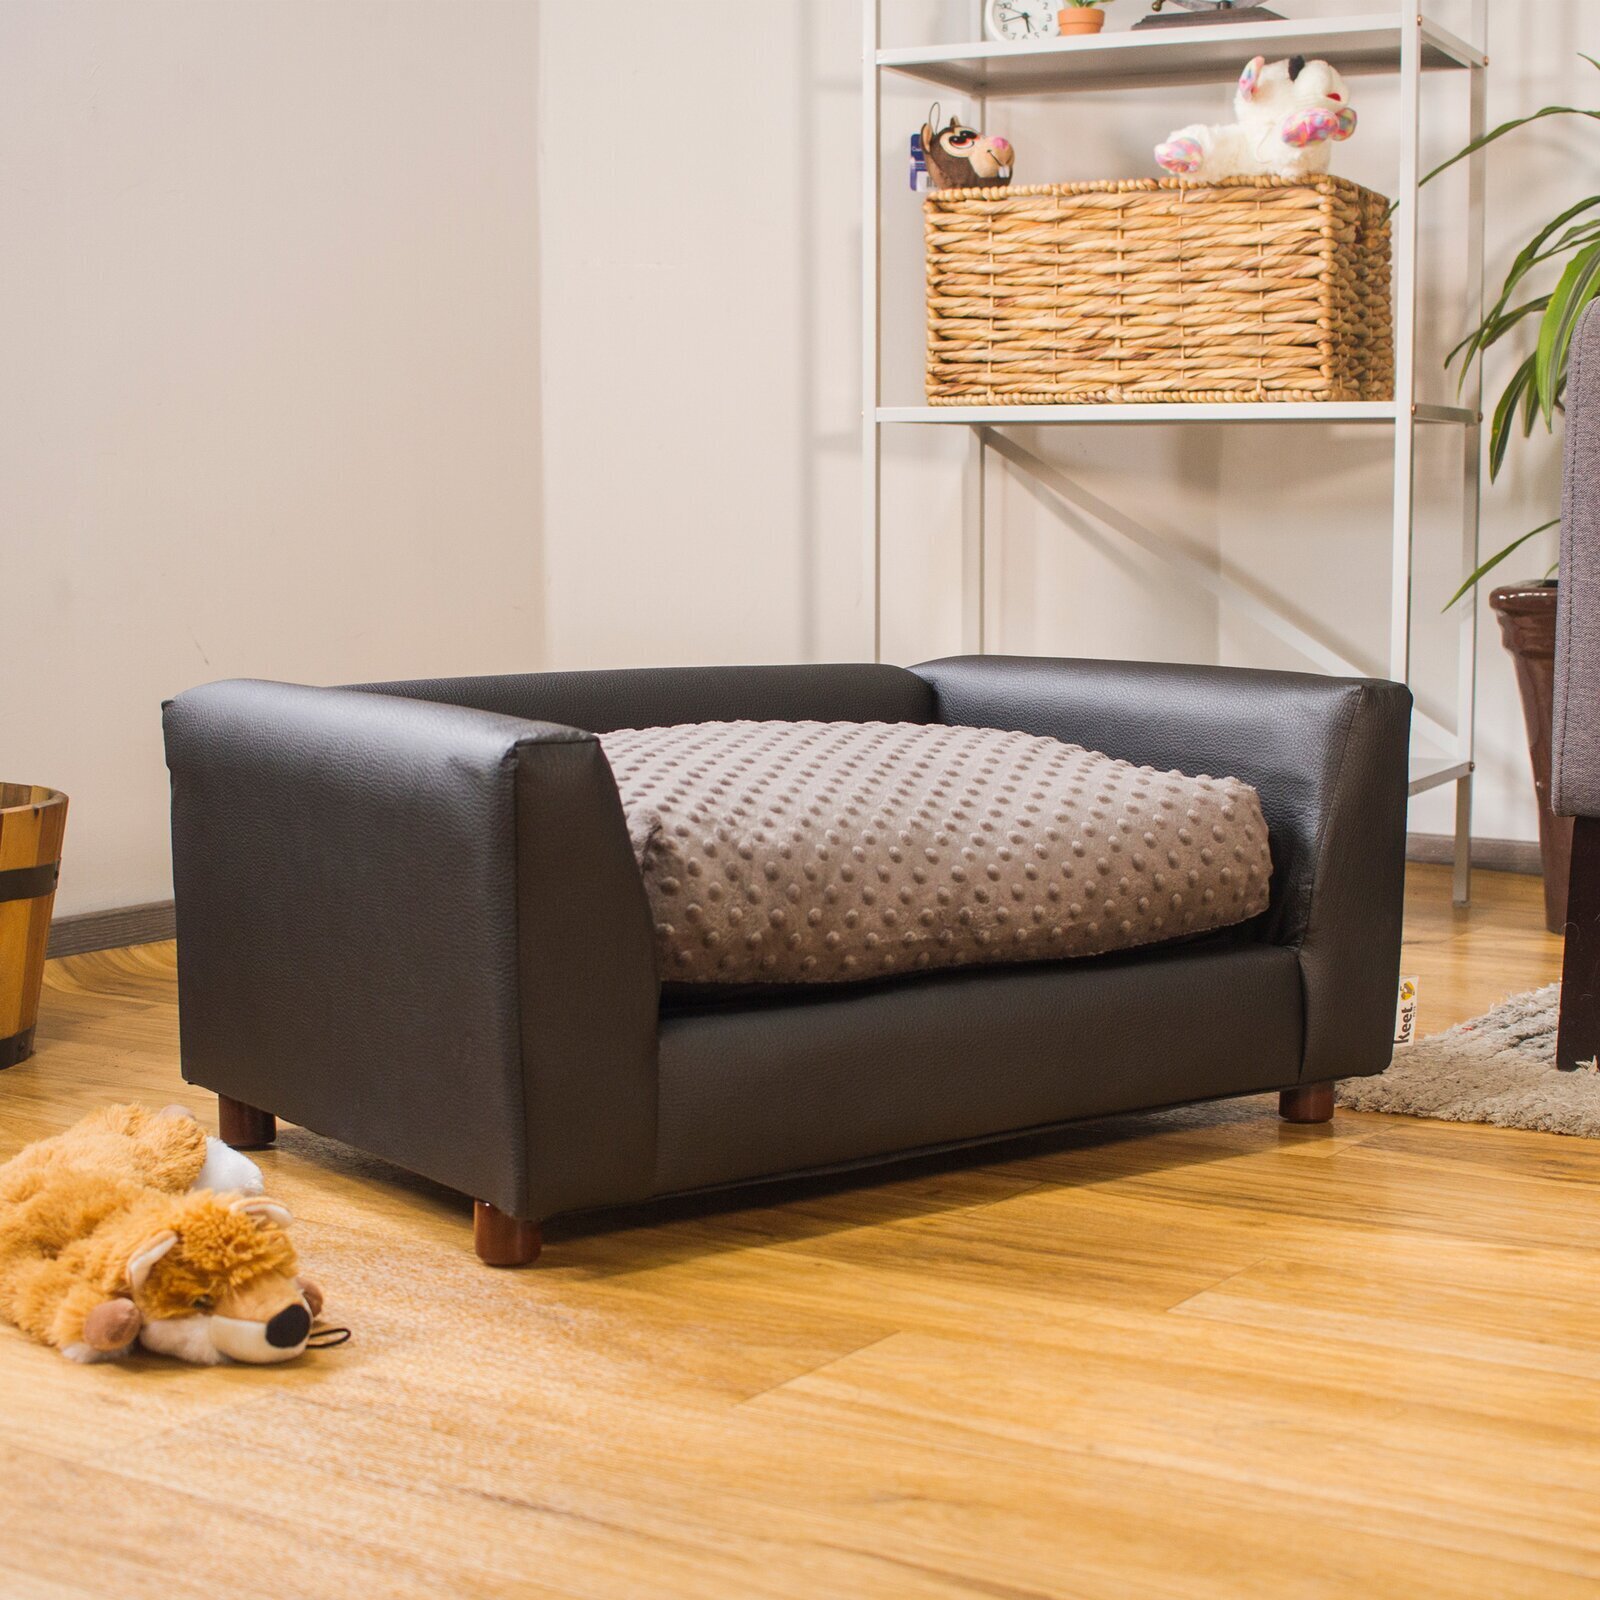 Classic leather dog sofa with cushion